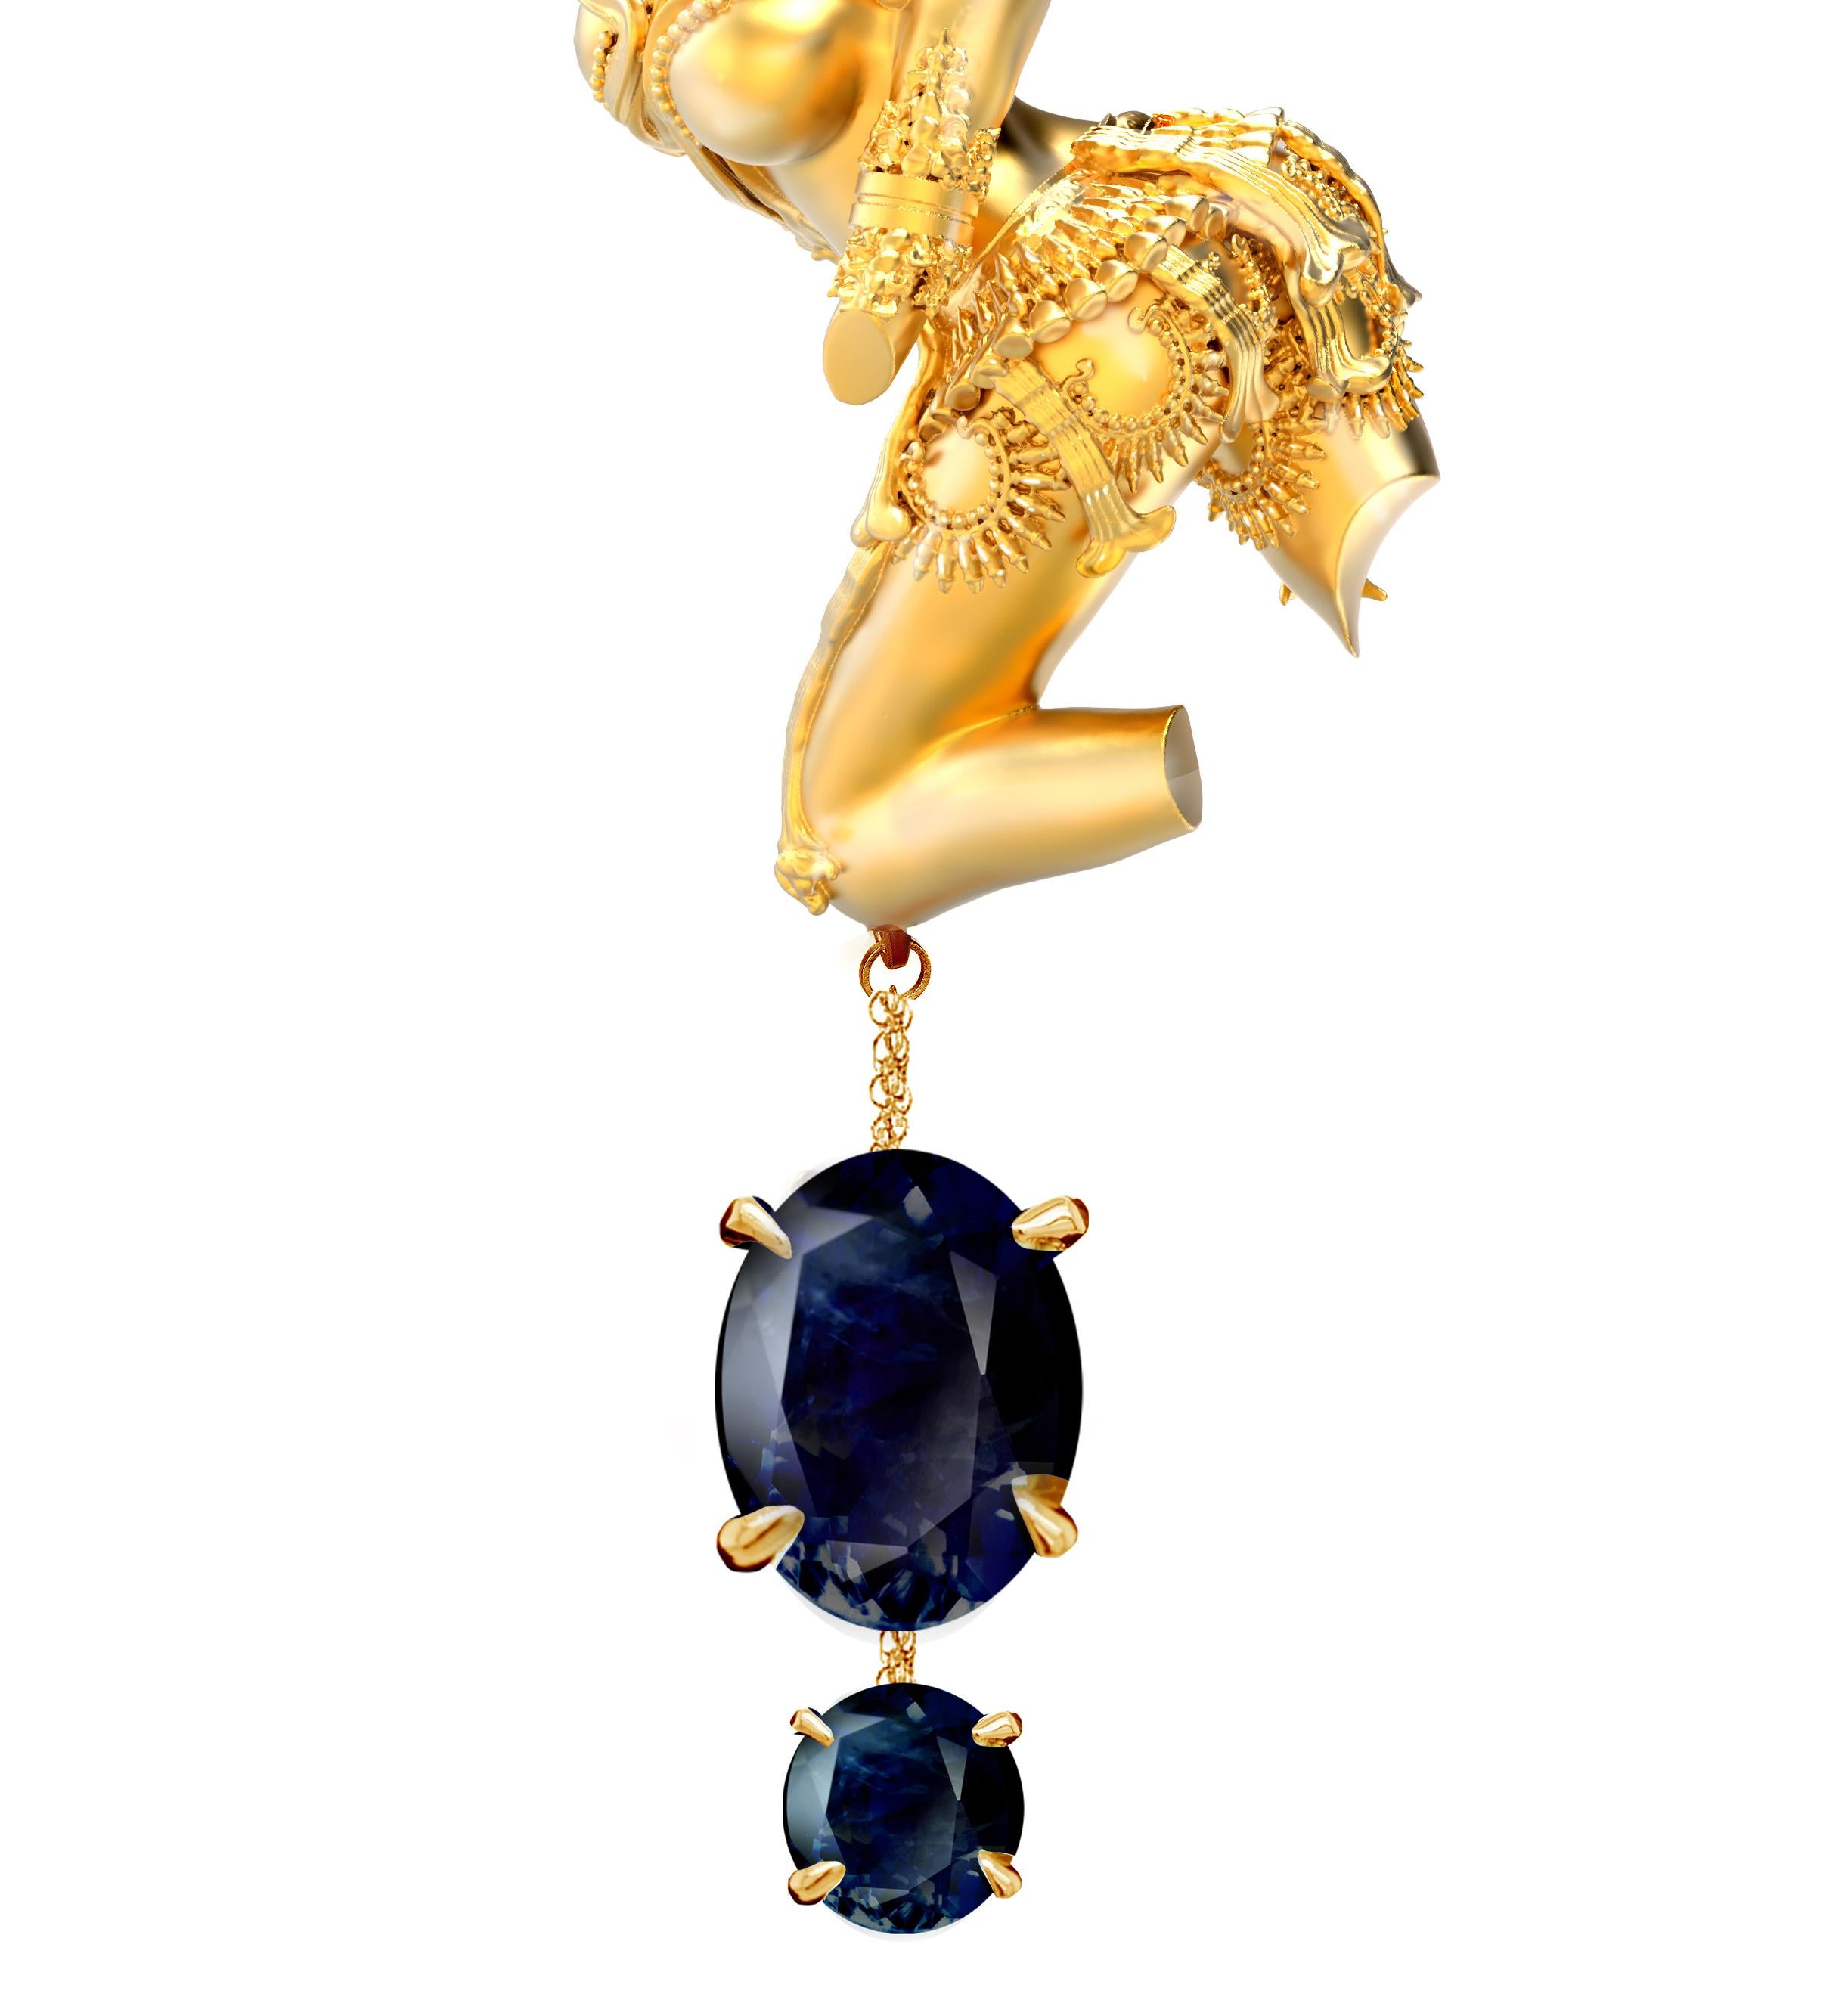 Oval Cut Eighteen Karat Yellow Gold Dakini Pendant Necklace with Dark Blue Sapphire For Sale